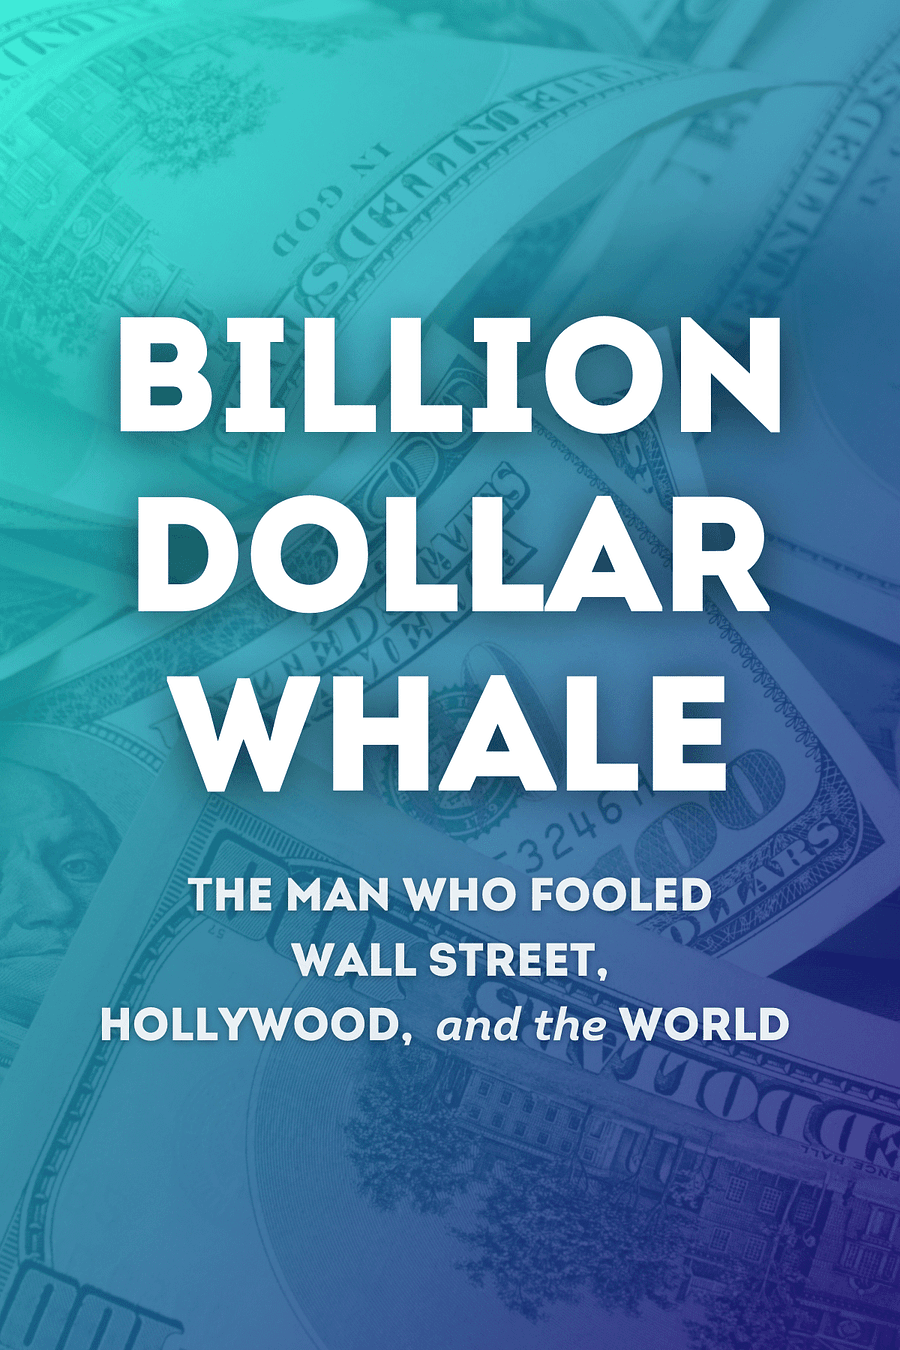 Billion Dollar Whale by Bradley Hope, Tom Wright - Book Summary